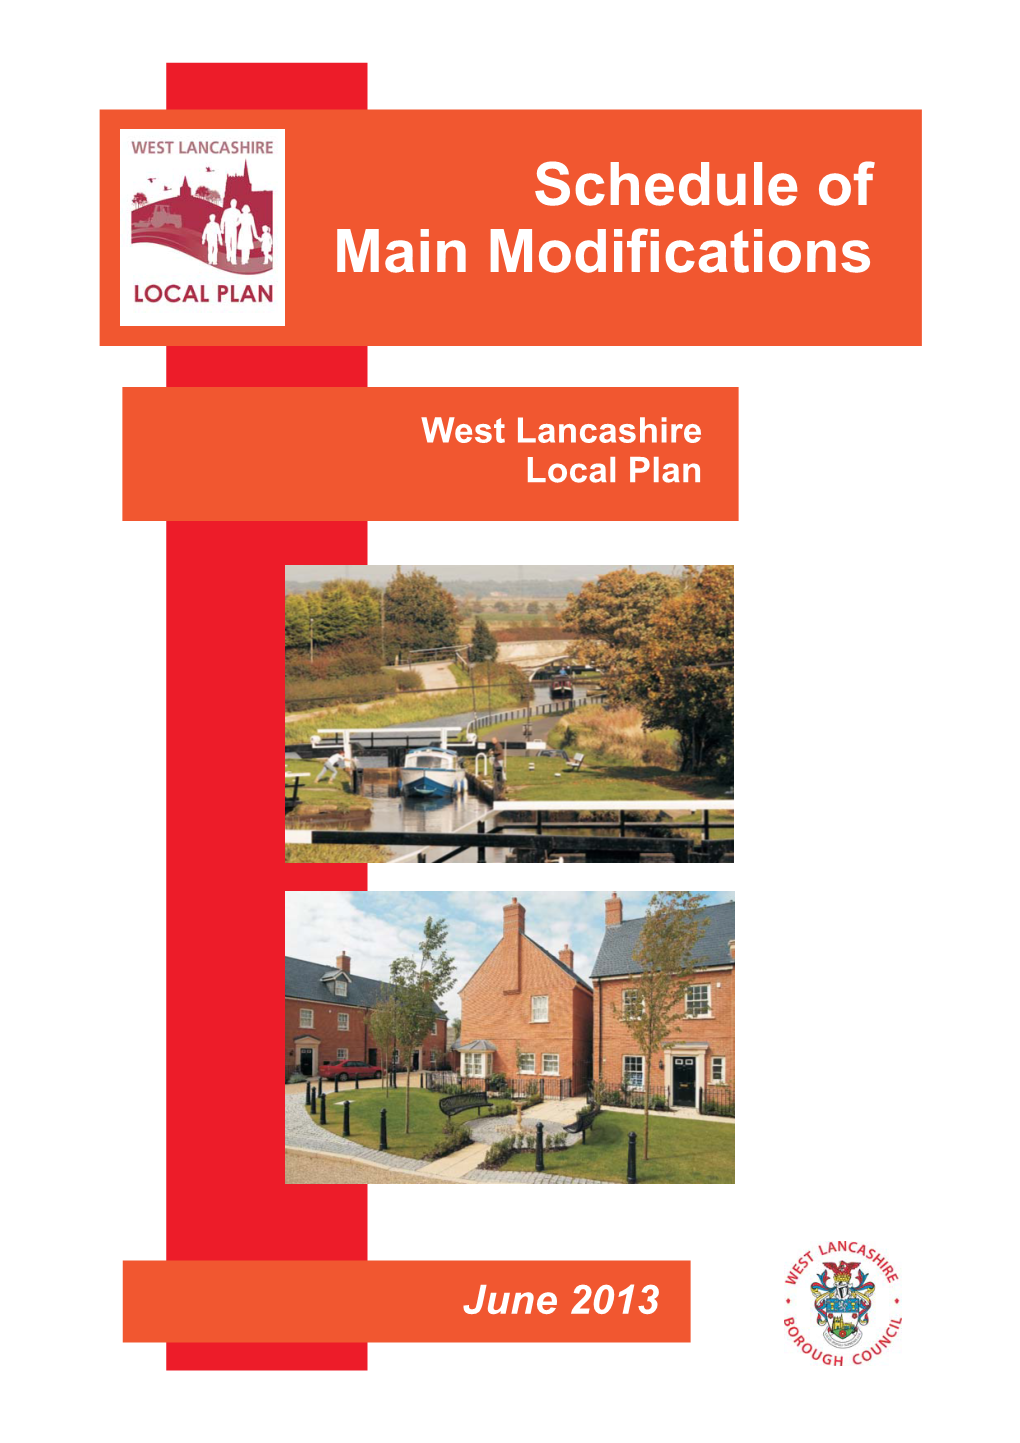 West Lancashire Local Plan